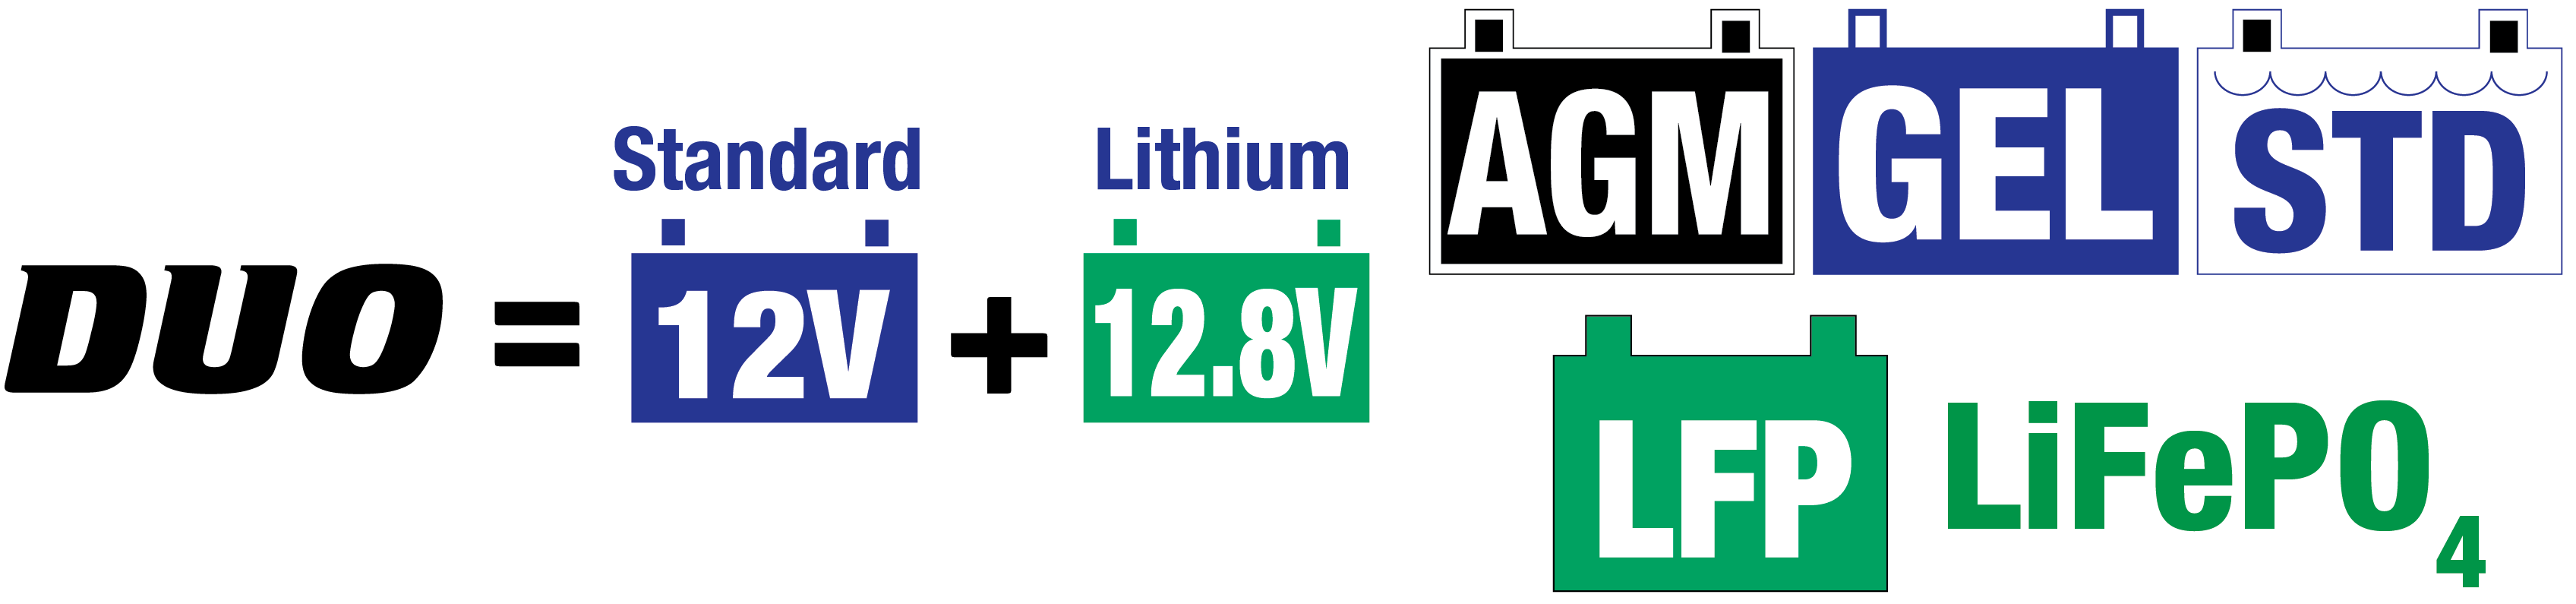 das solar batterie ladegerät ist ideal für 12V-Bleiakkus/12,8V-Lithium-Batterien